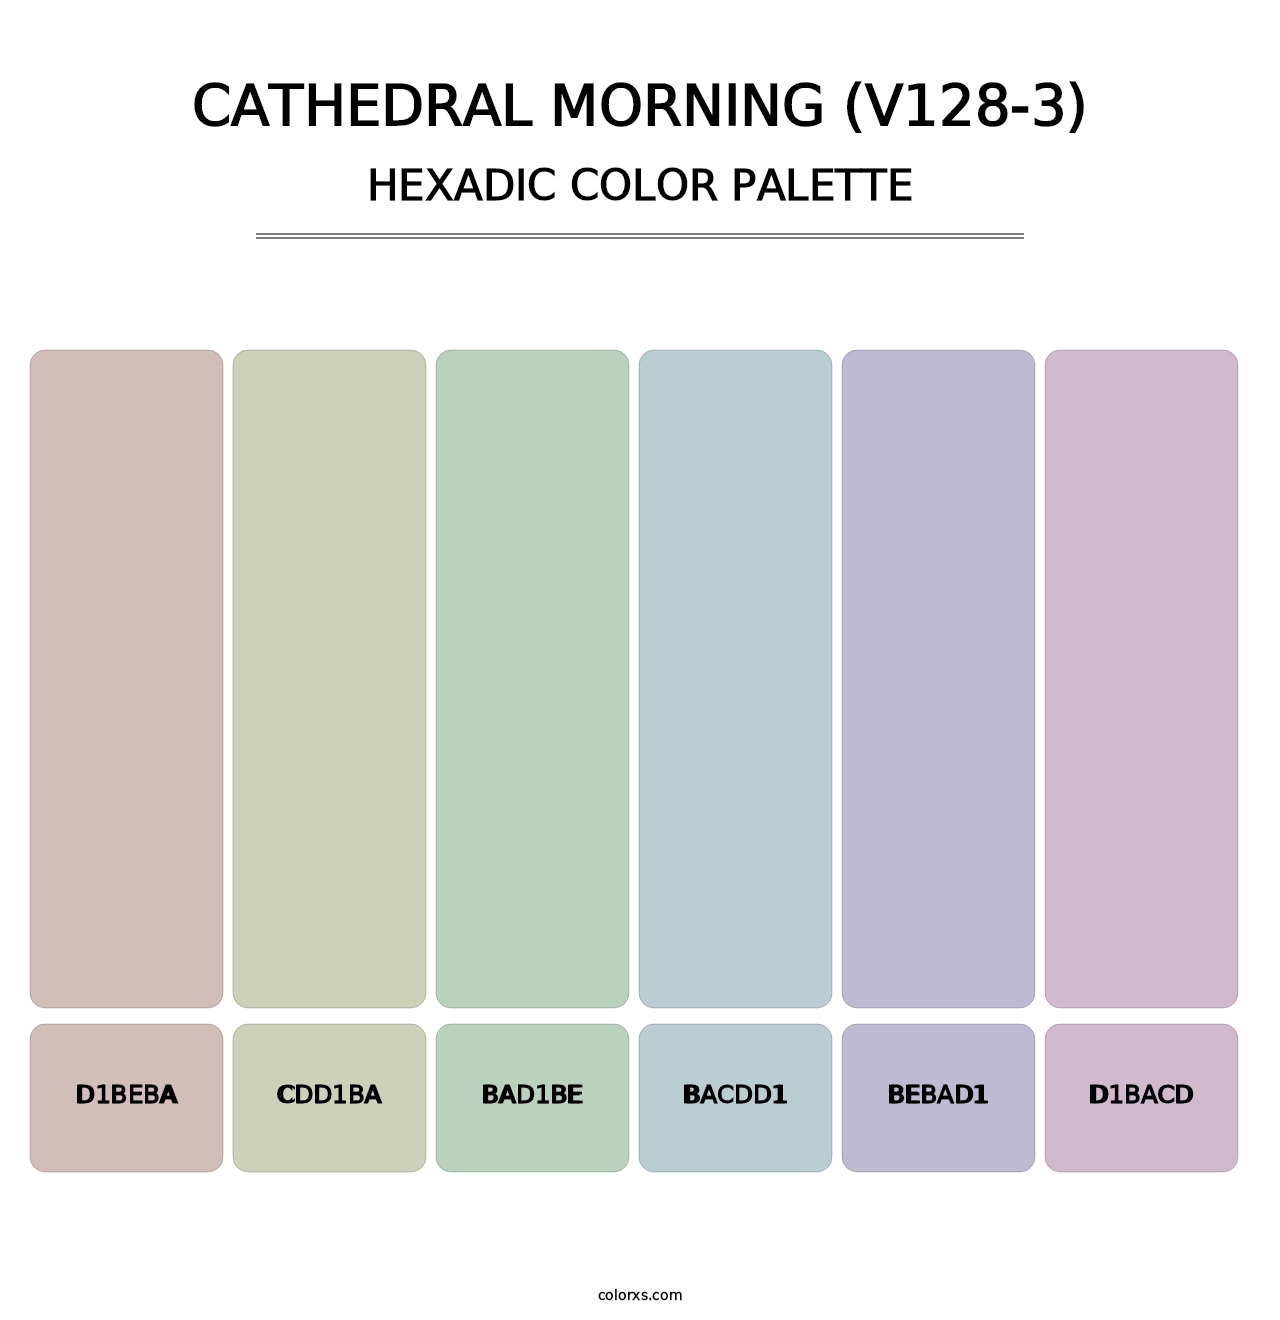 Cathedral Morning (V128-3) - Hexadic Color Palette